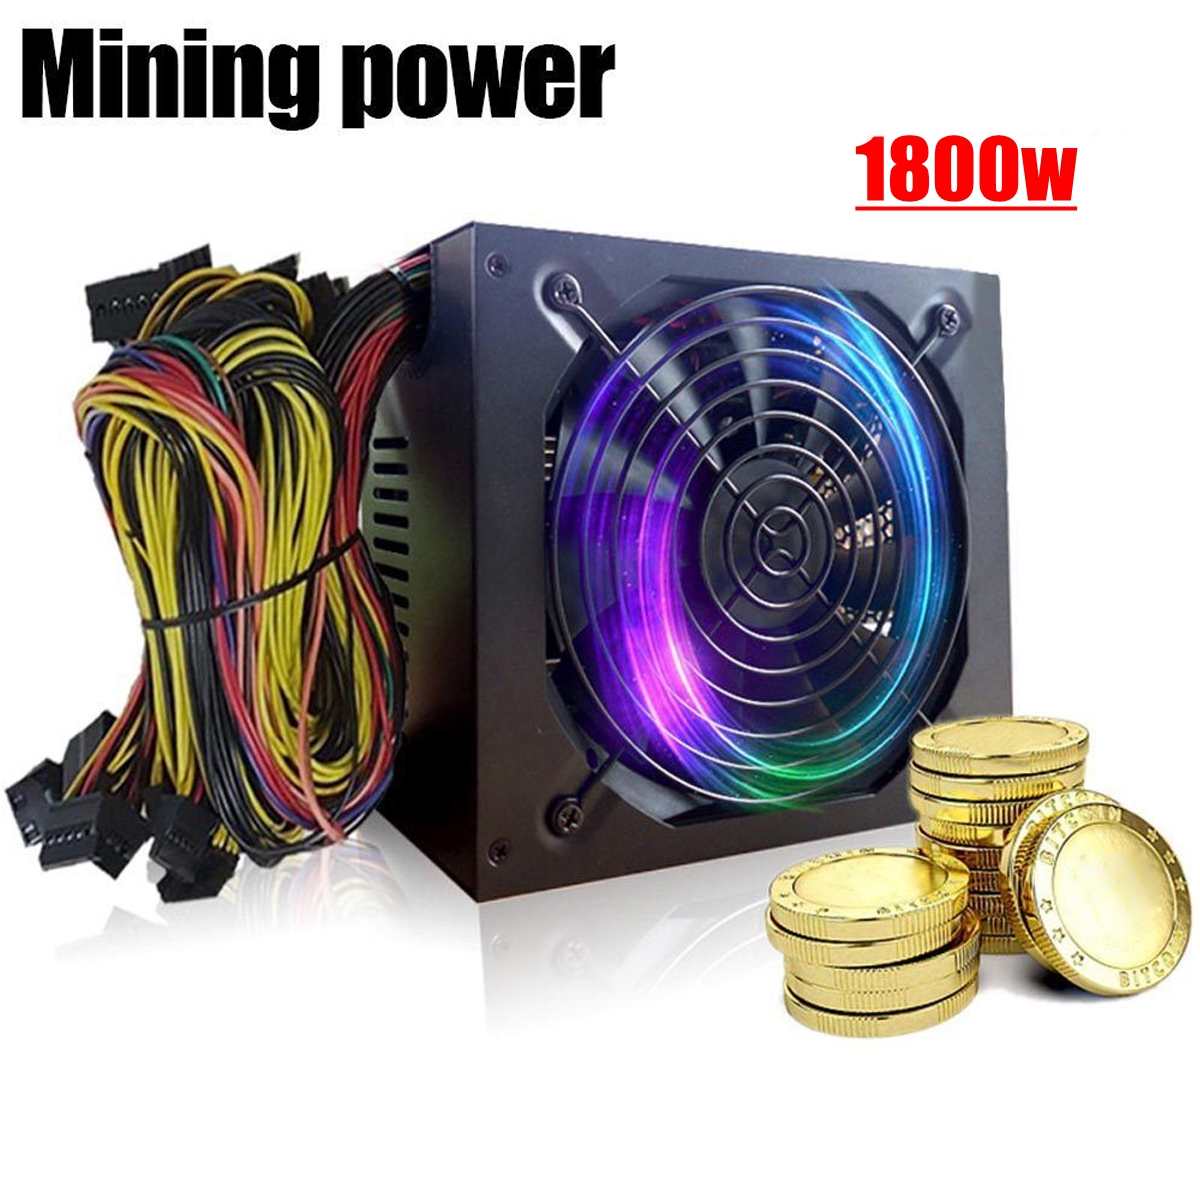 Professional-1800W-Mining-ATX-Power-Supply-Miner-Mining-Machine-SATA-IDE-For-6-GPU-ETH-BTC-Ethereum-1253762